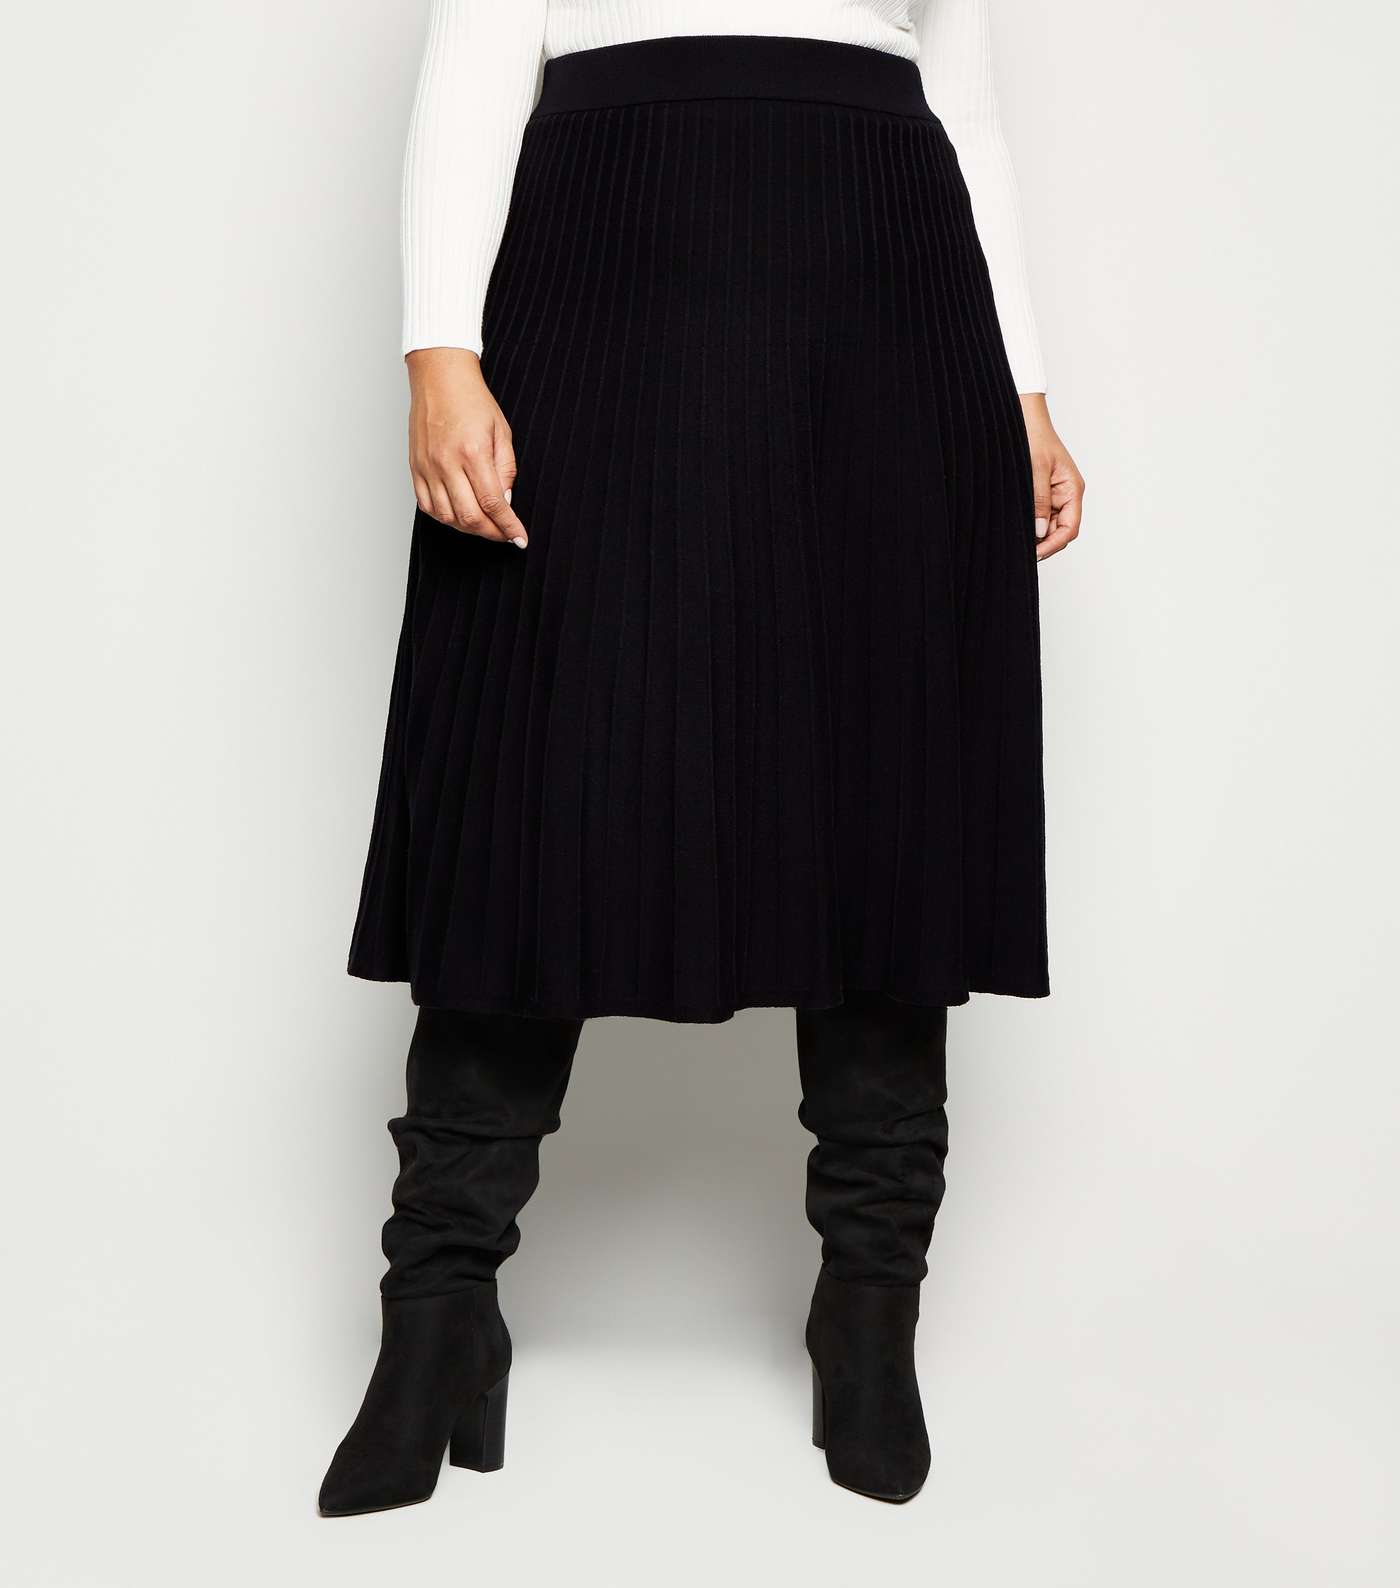 Apricot Curves Black Knit Pleated Midi Skirt Image 2